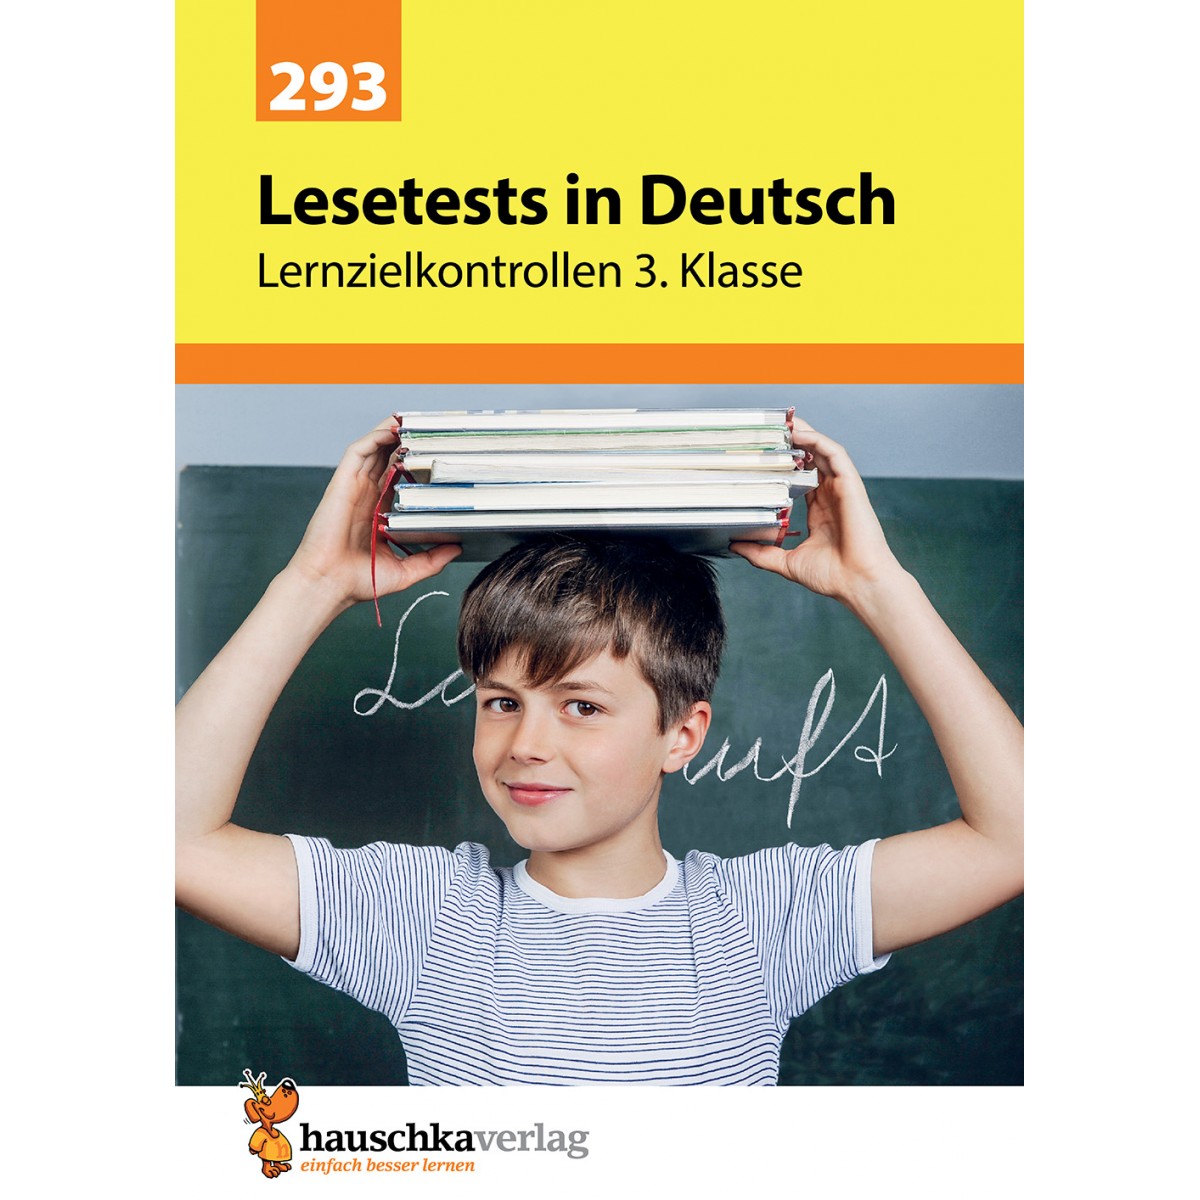 Hauschka Verlag - Lesetests in Deutsch - Lernzielkontrollen 3. Klasse, A4- Heft